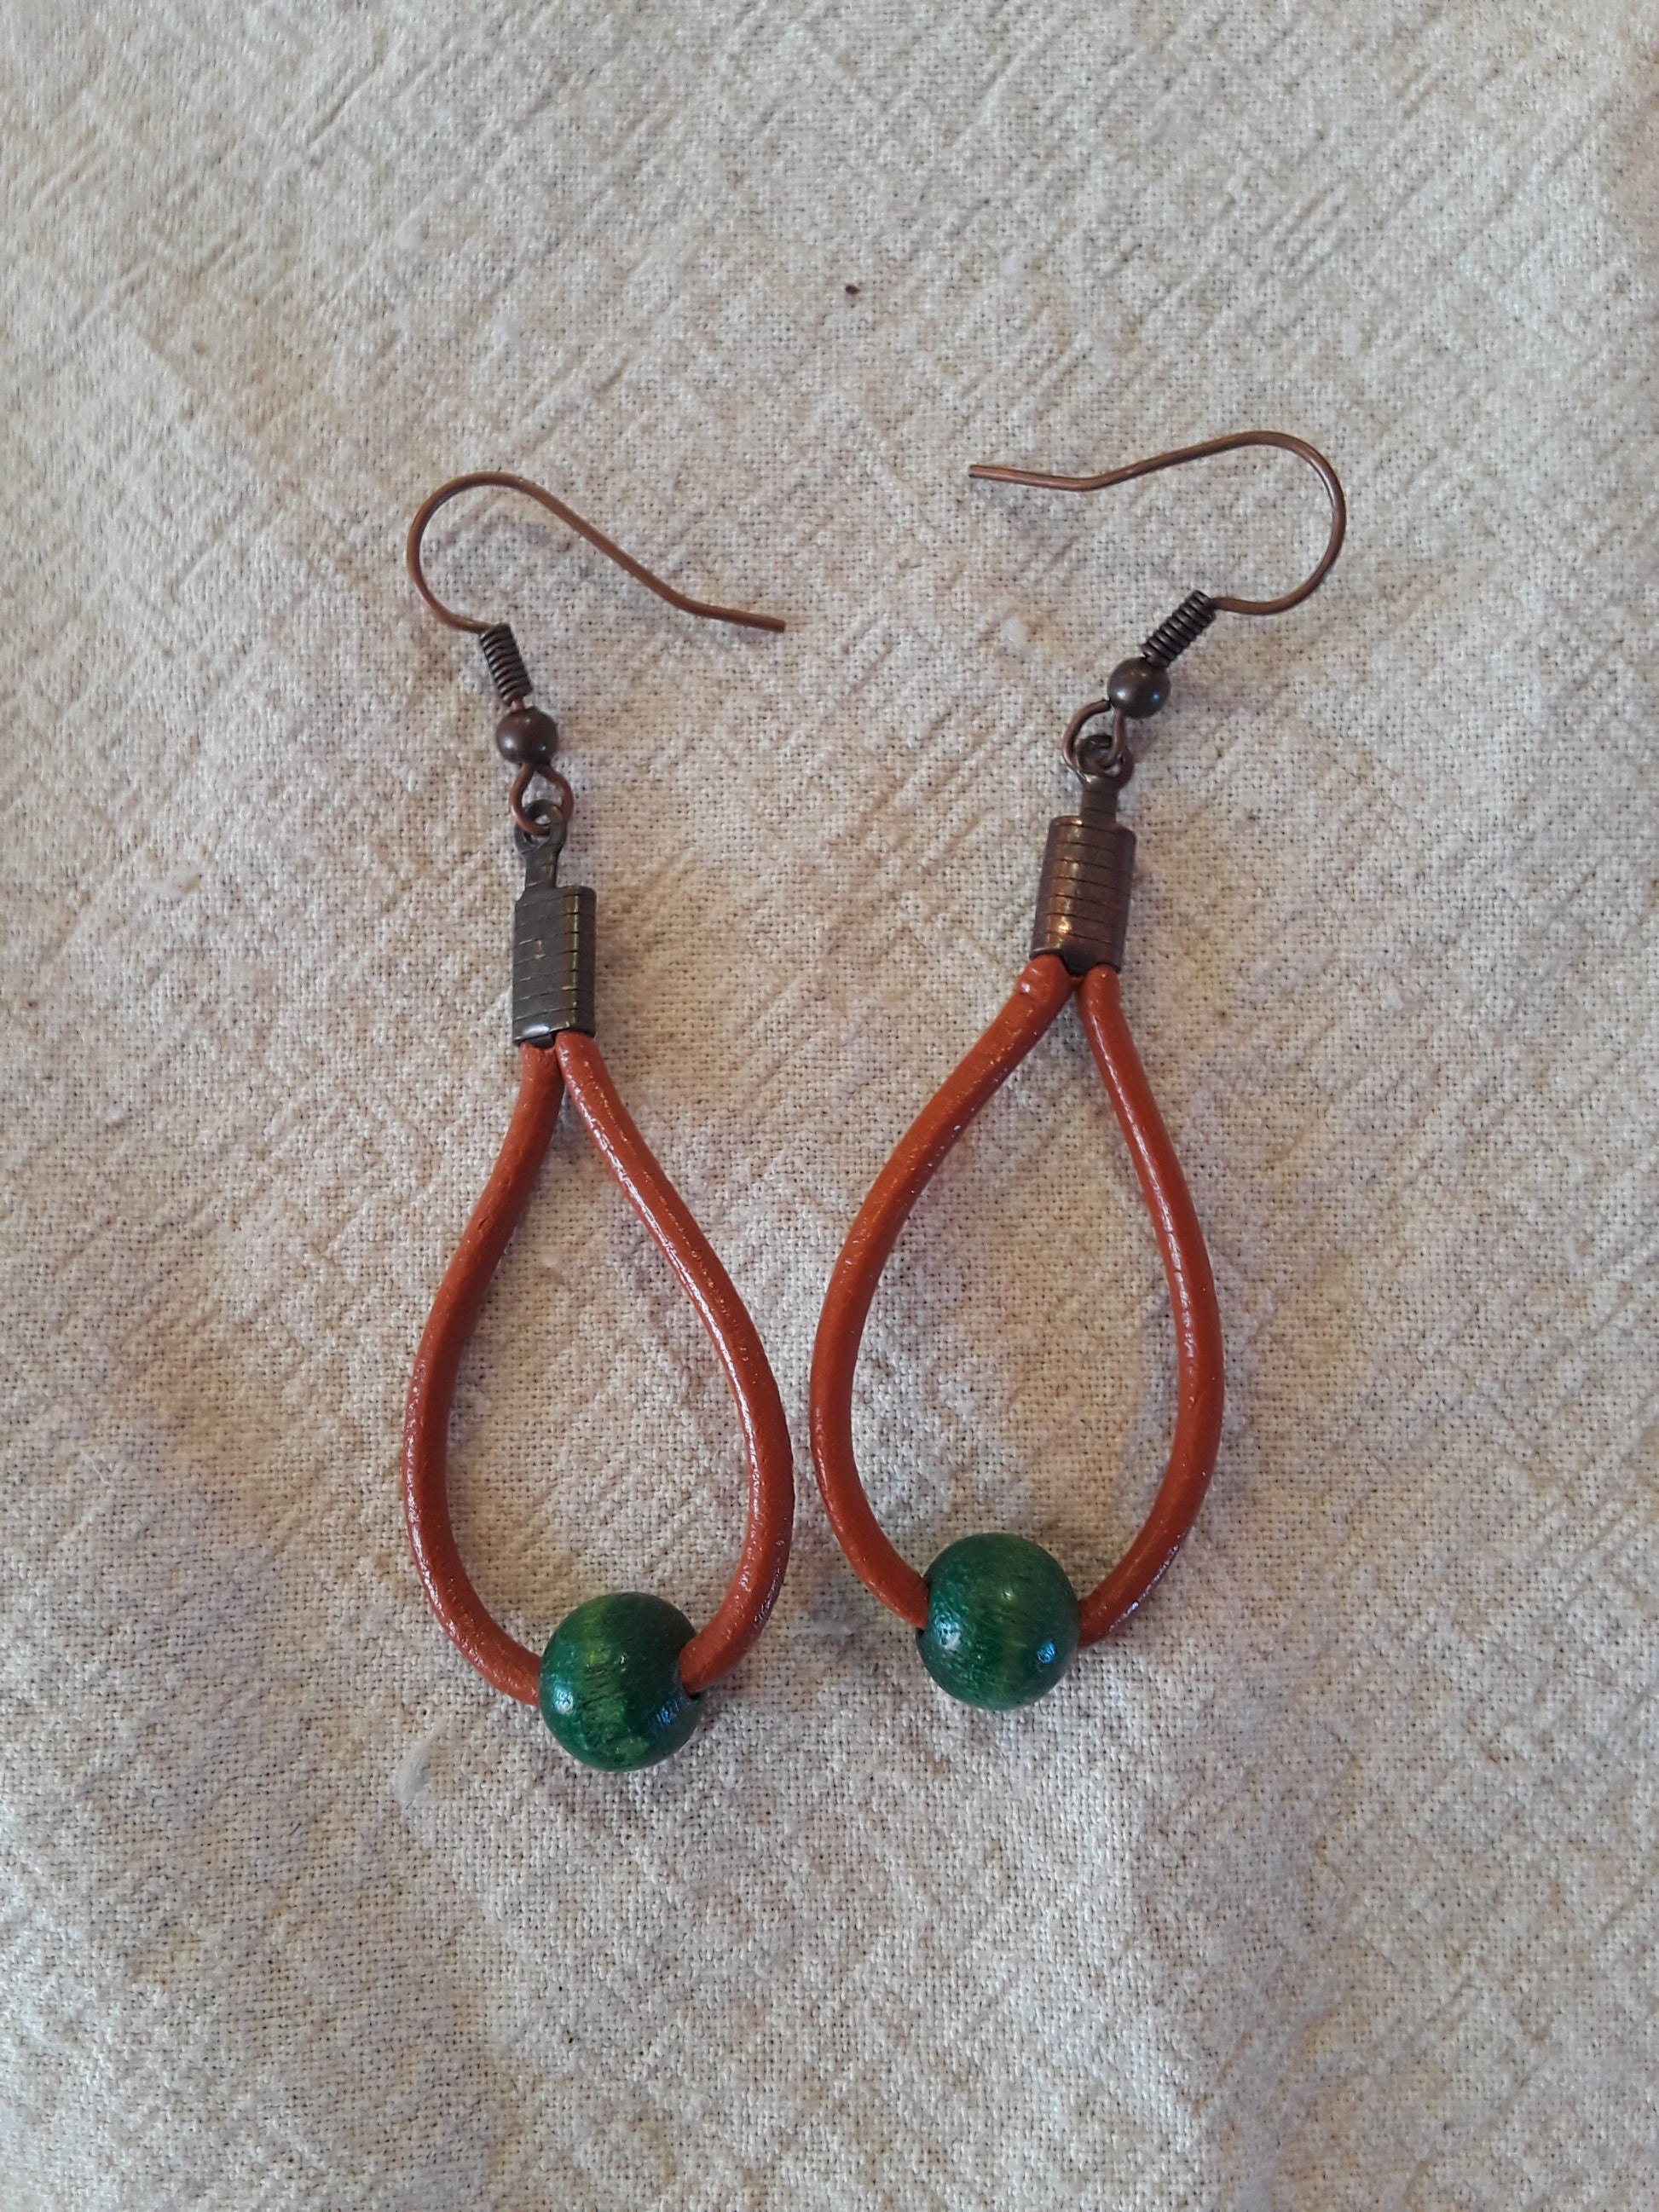 Leather cord earrings